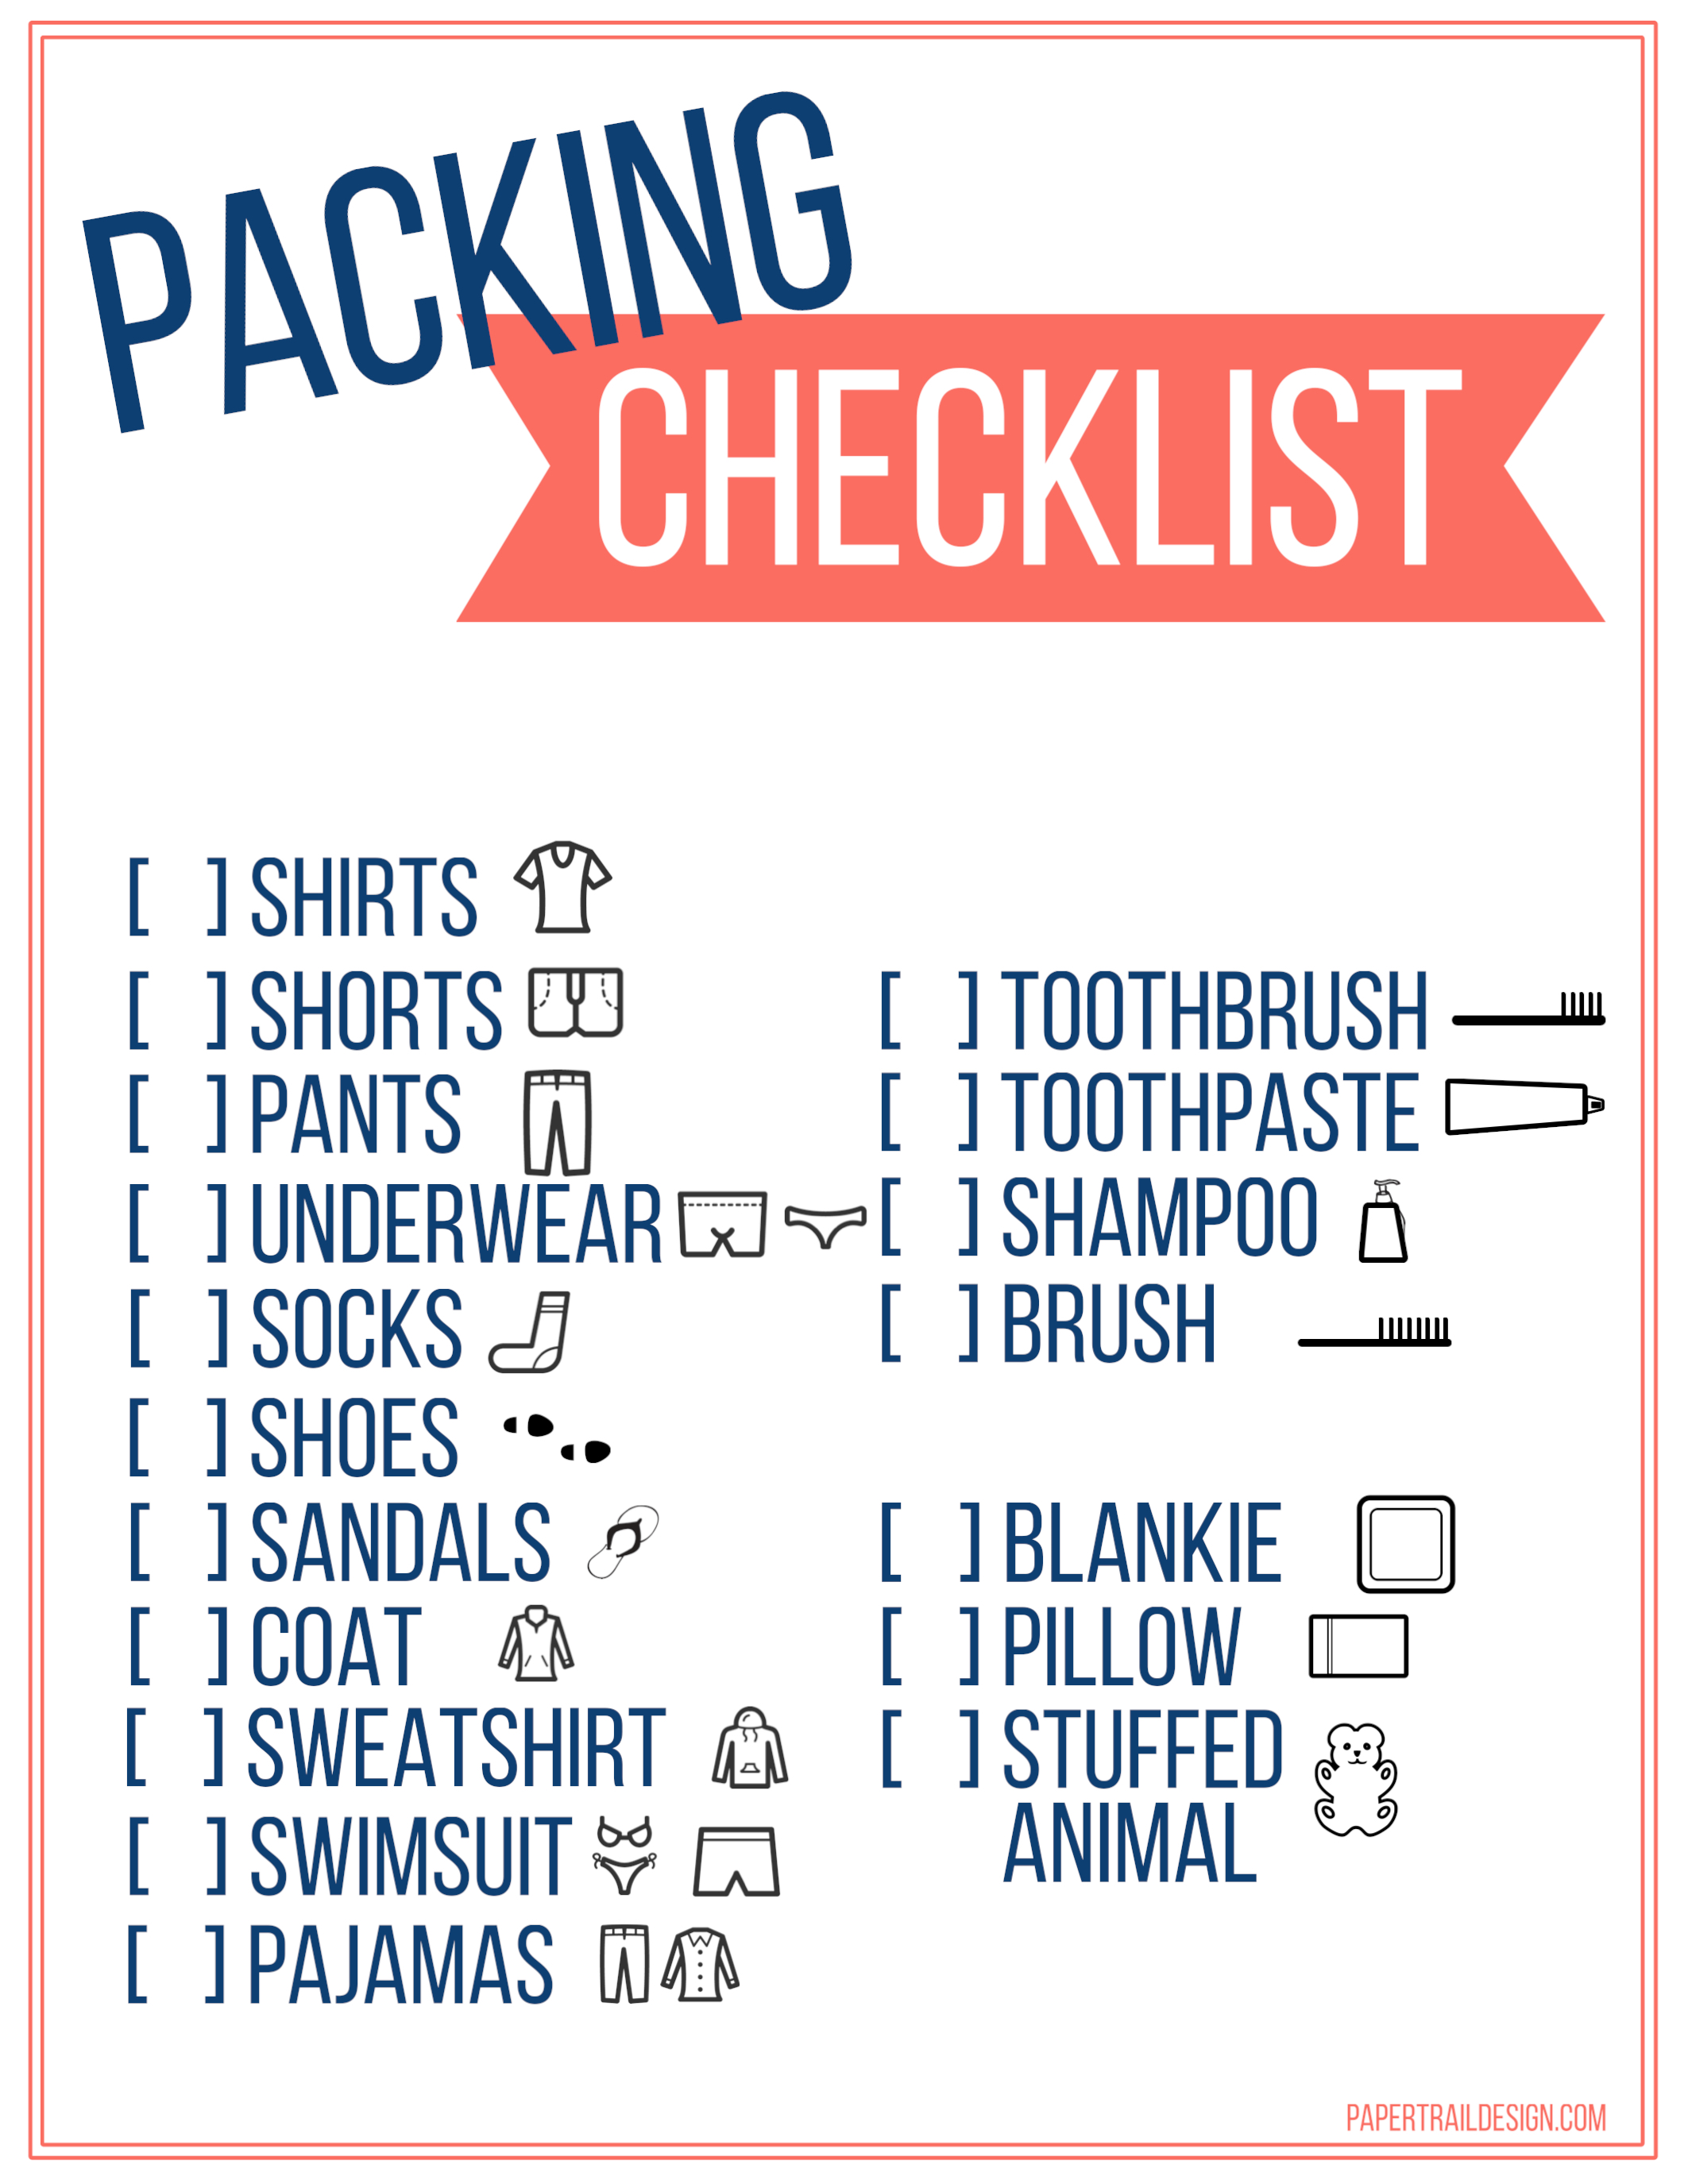 trip checklist template